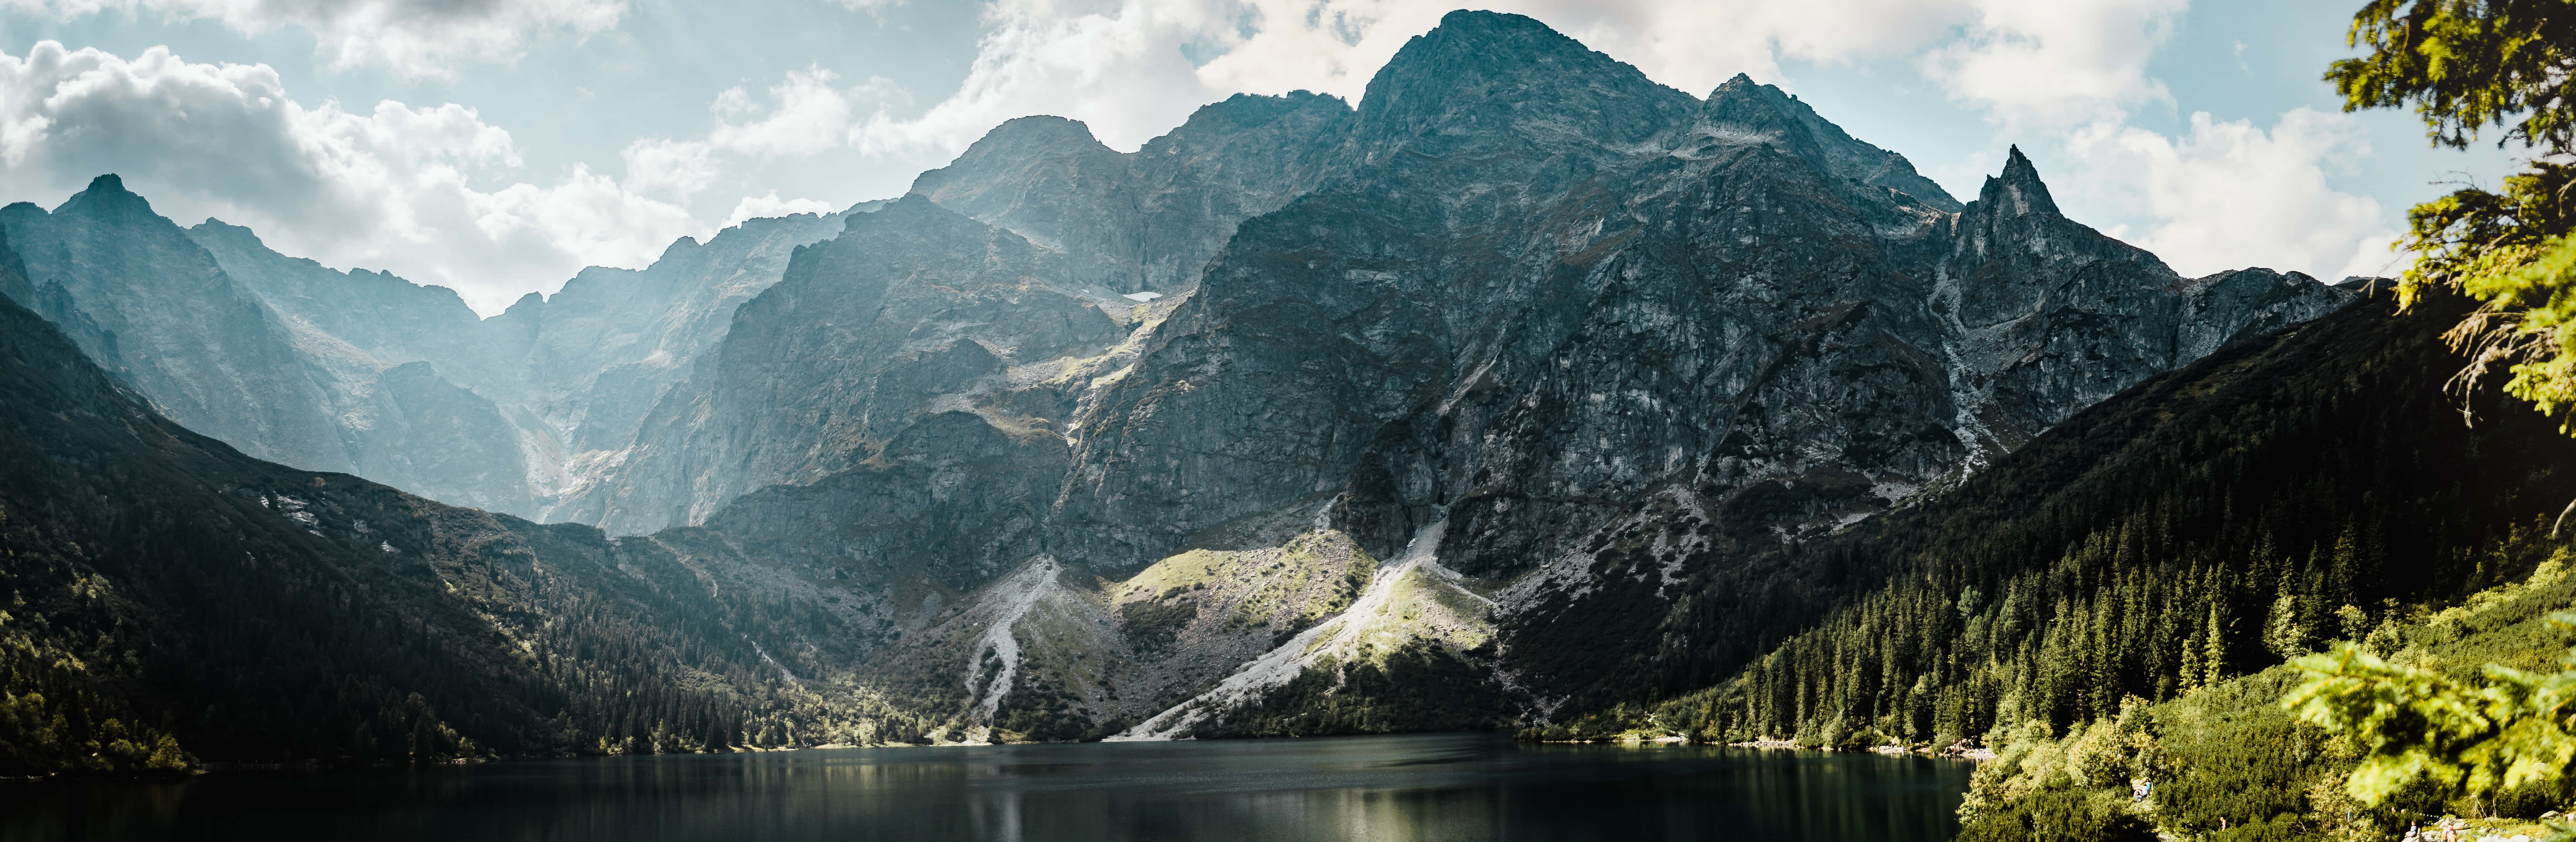 Mountain Range With A Lake Ultra Hd Dual Monitor - Wallpaper Wallpaper